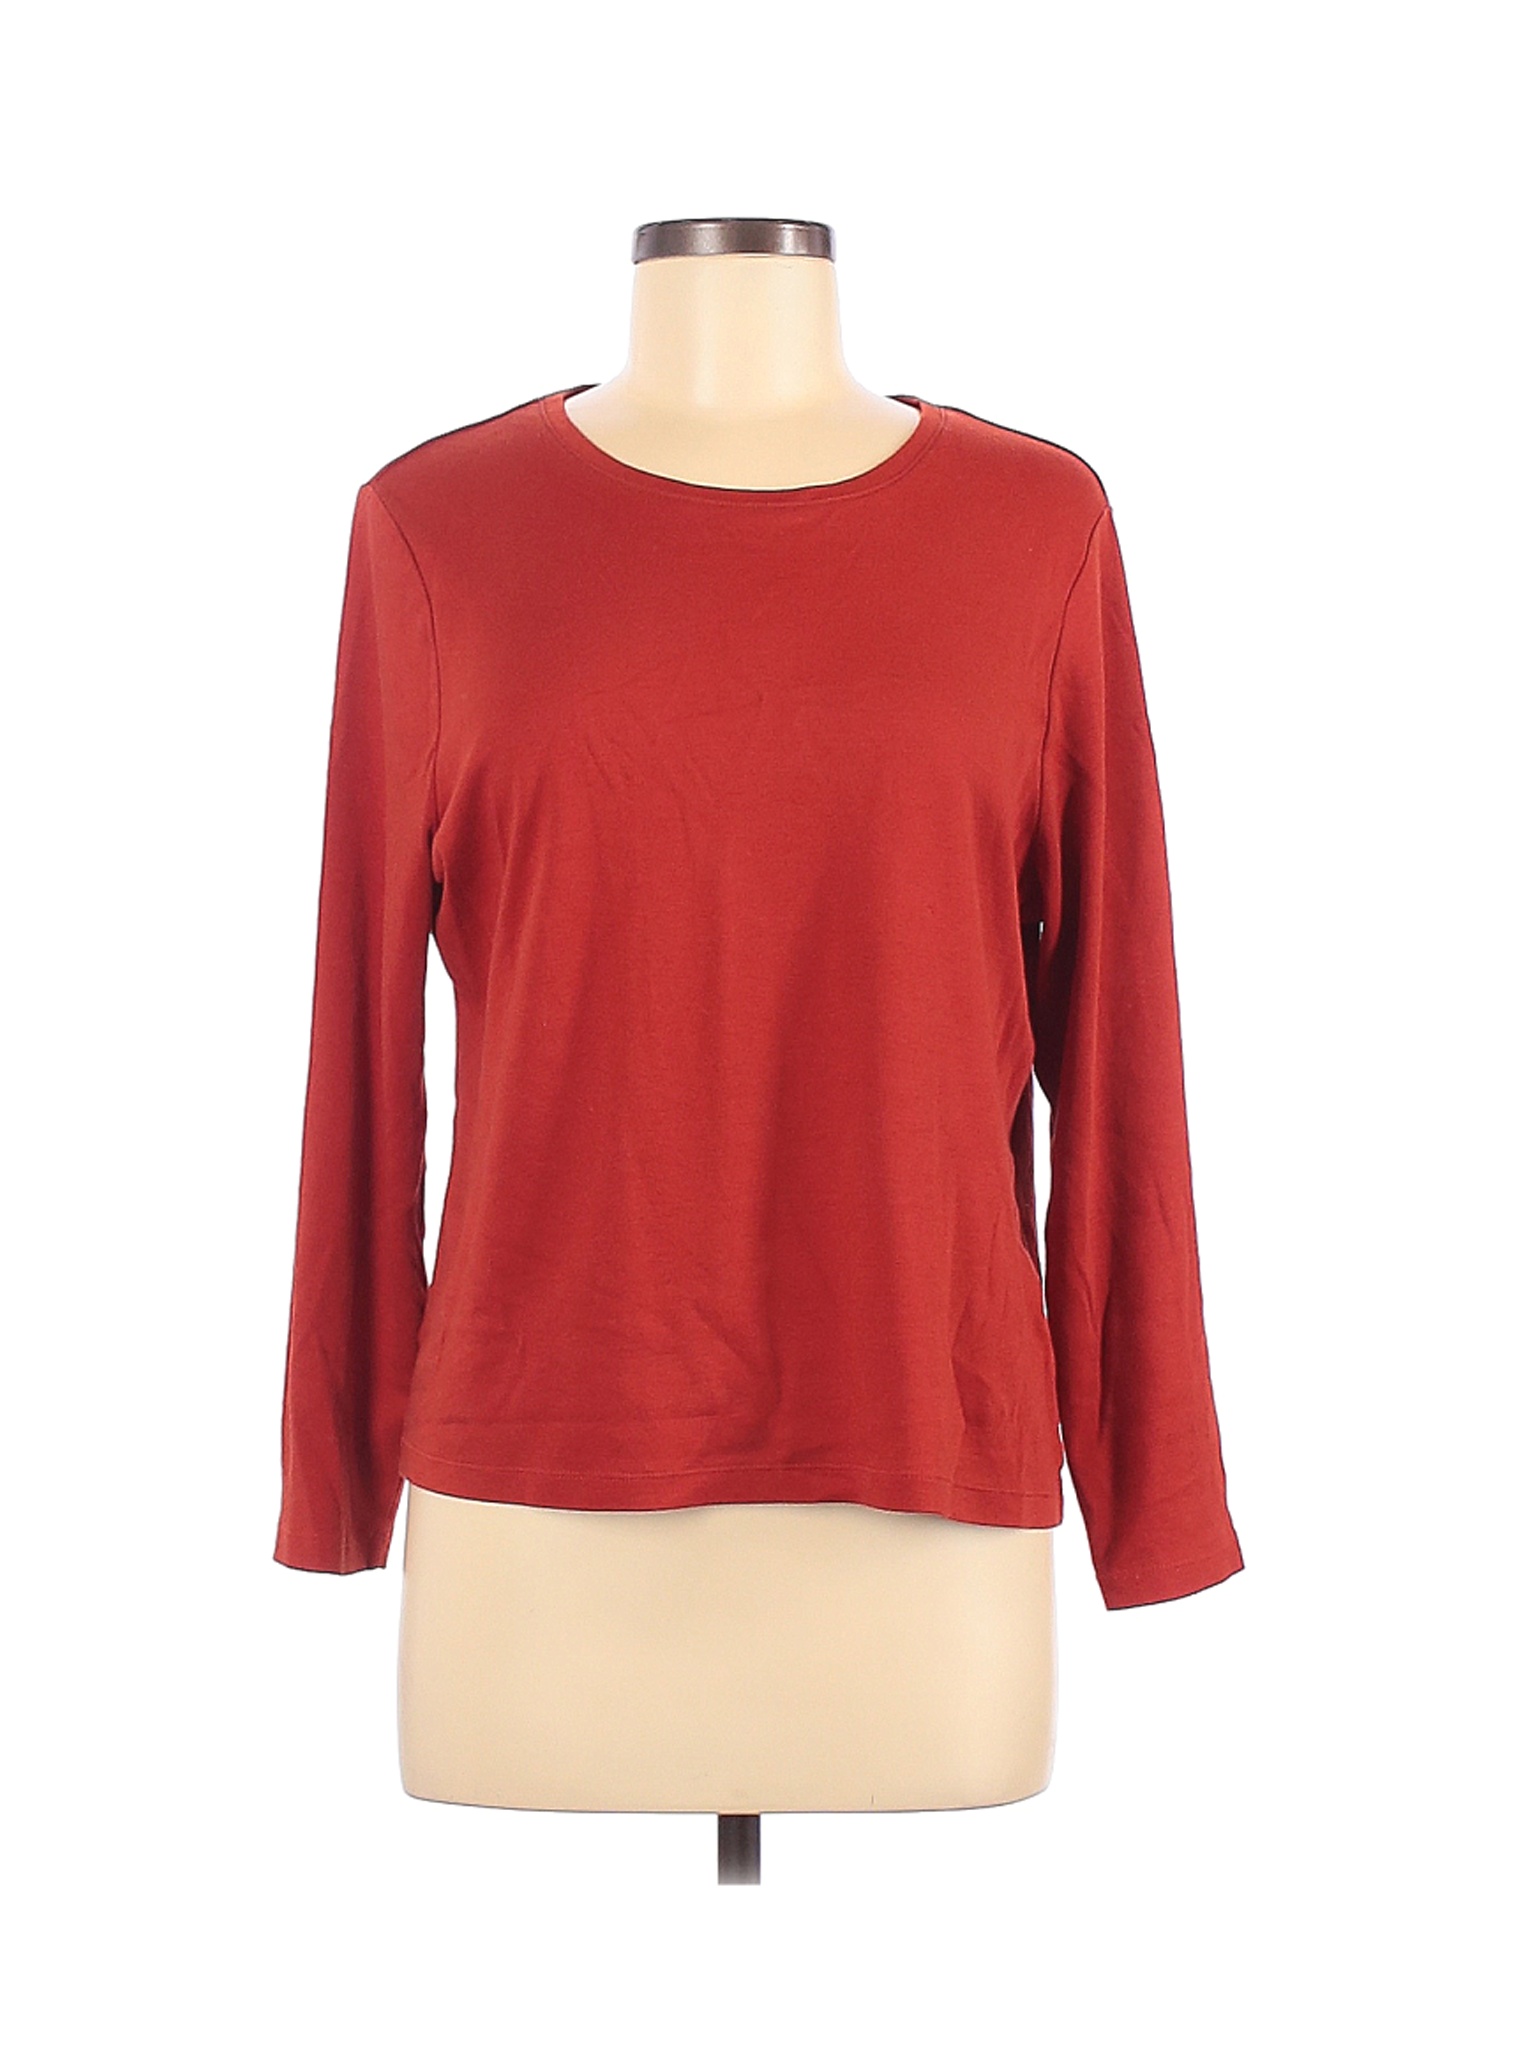 Studio Works Women Red Long Sleeve T-Shirt L Petites | eBay